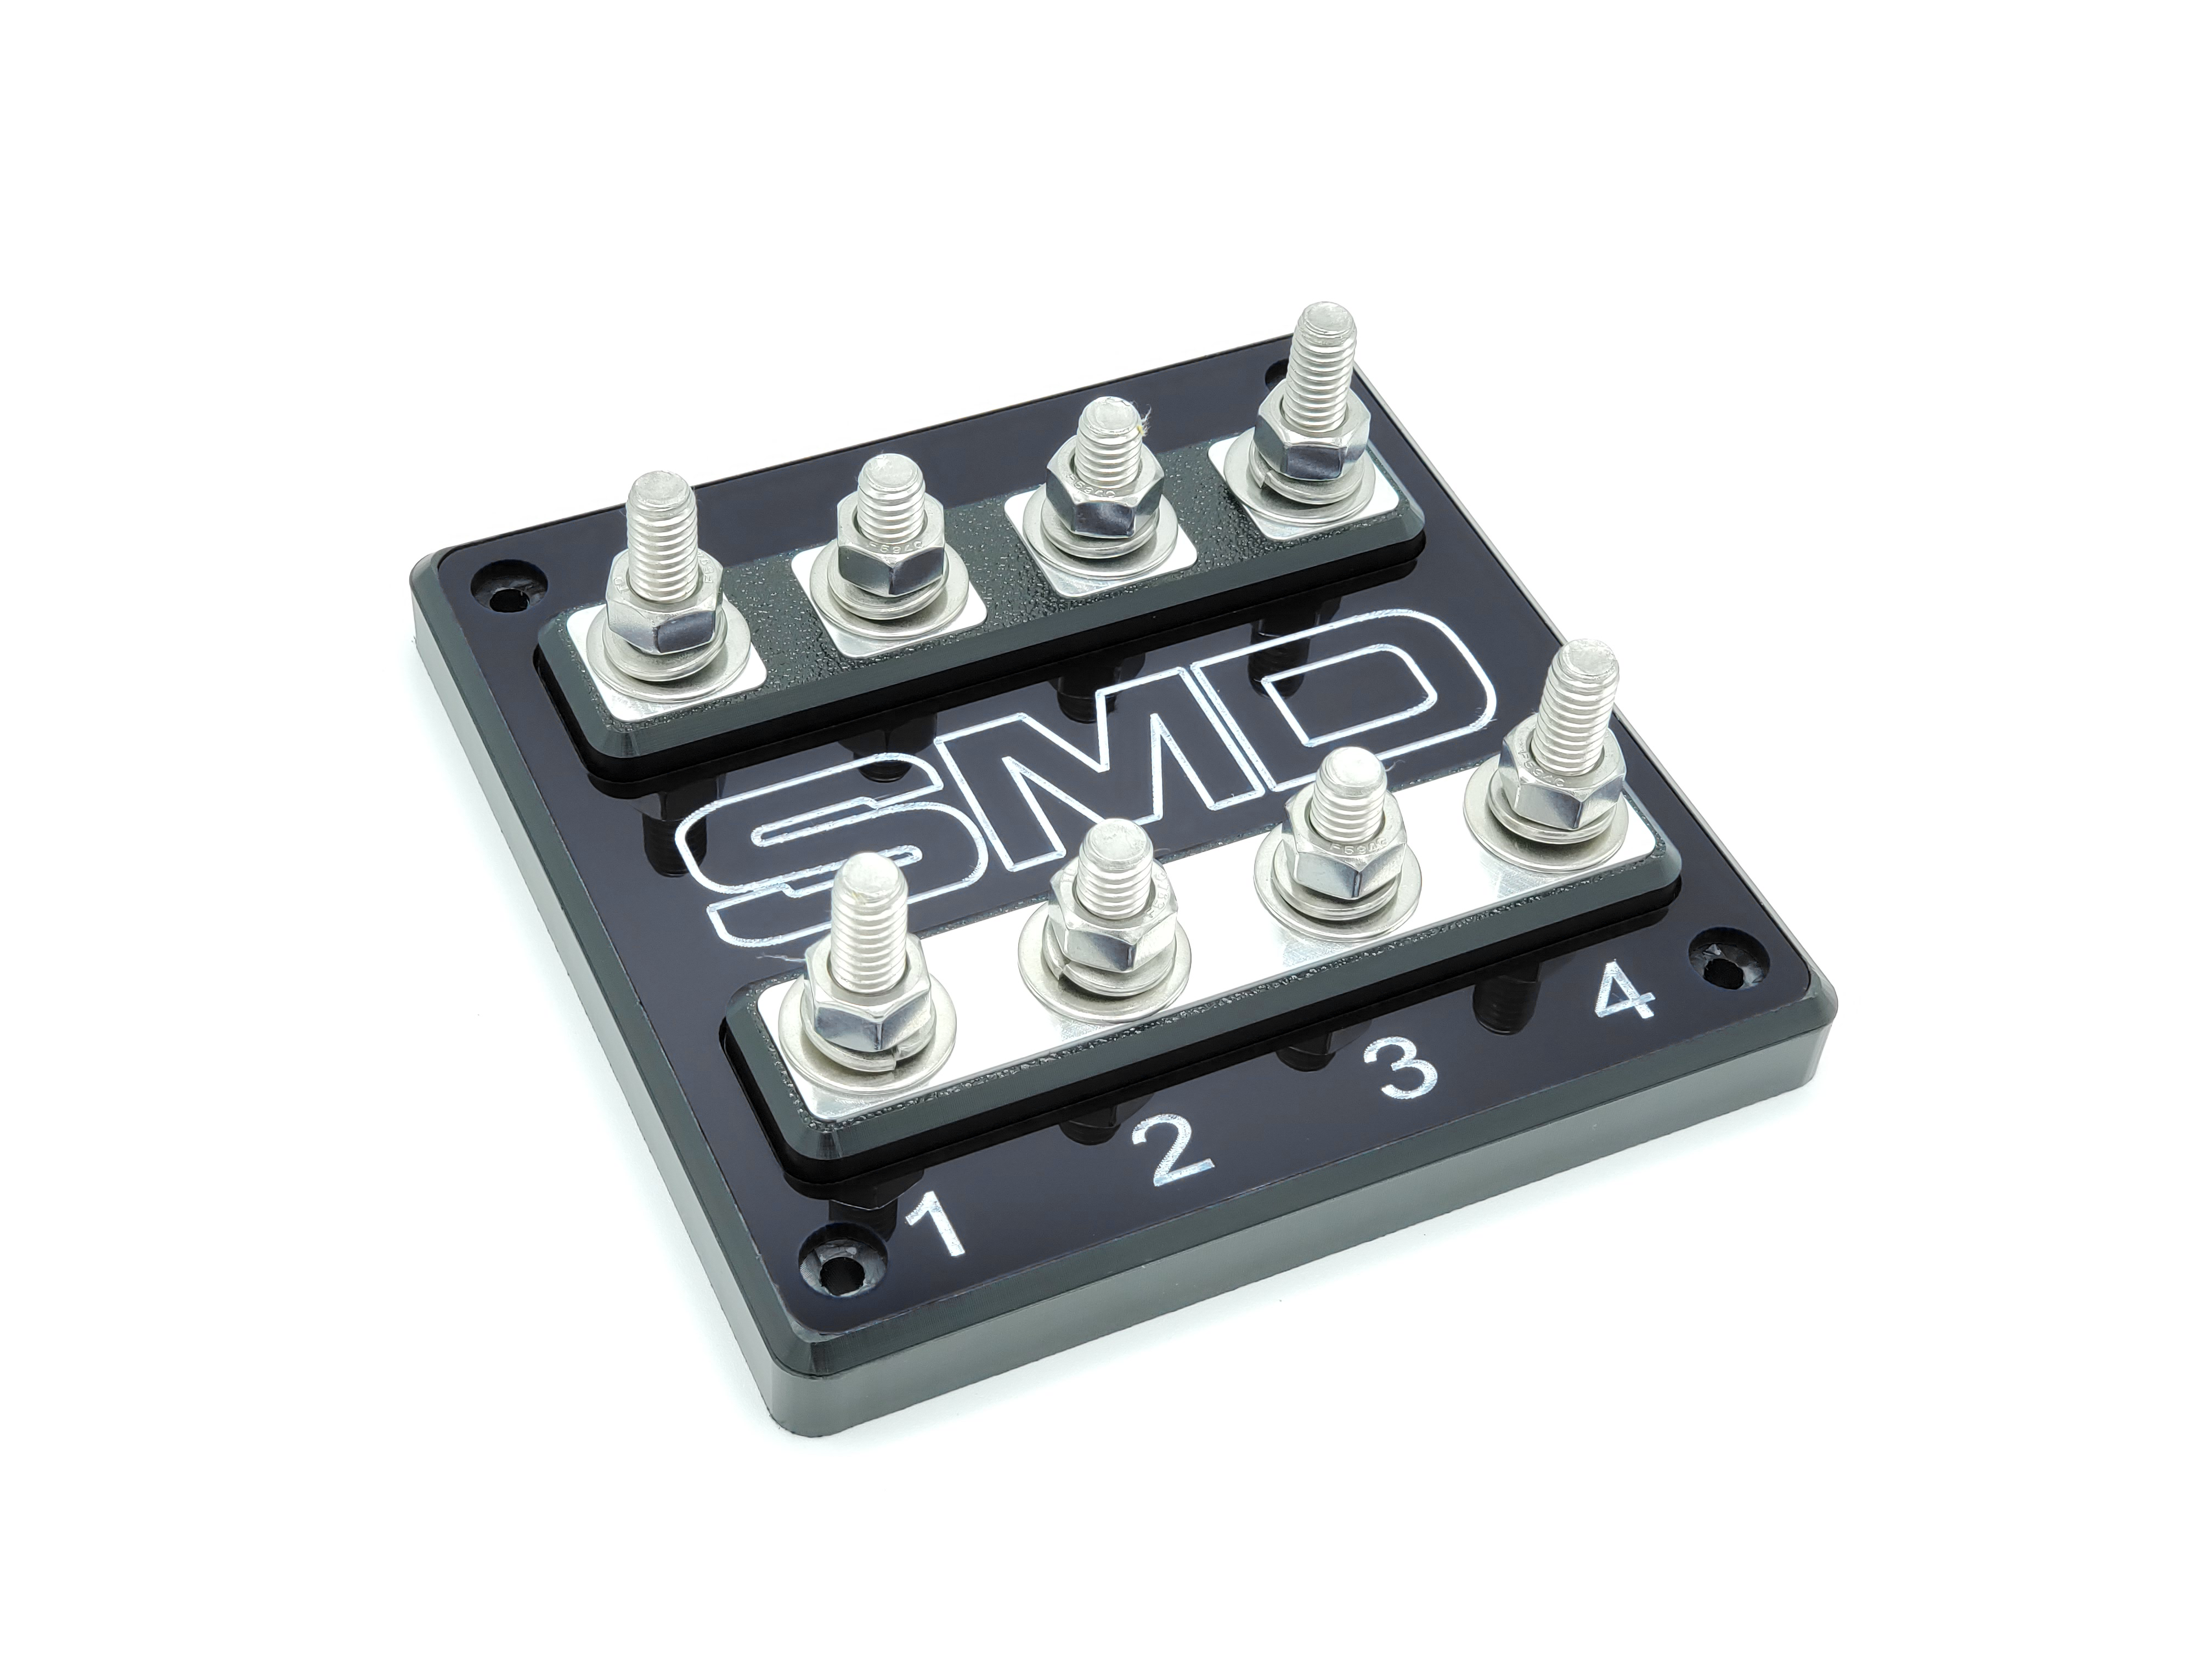 SMD Quad 4-Spot ANL Fuse Block - Steve Meade Designs